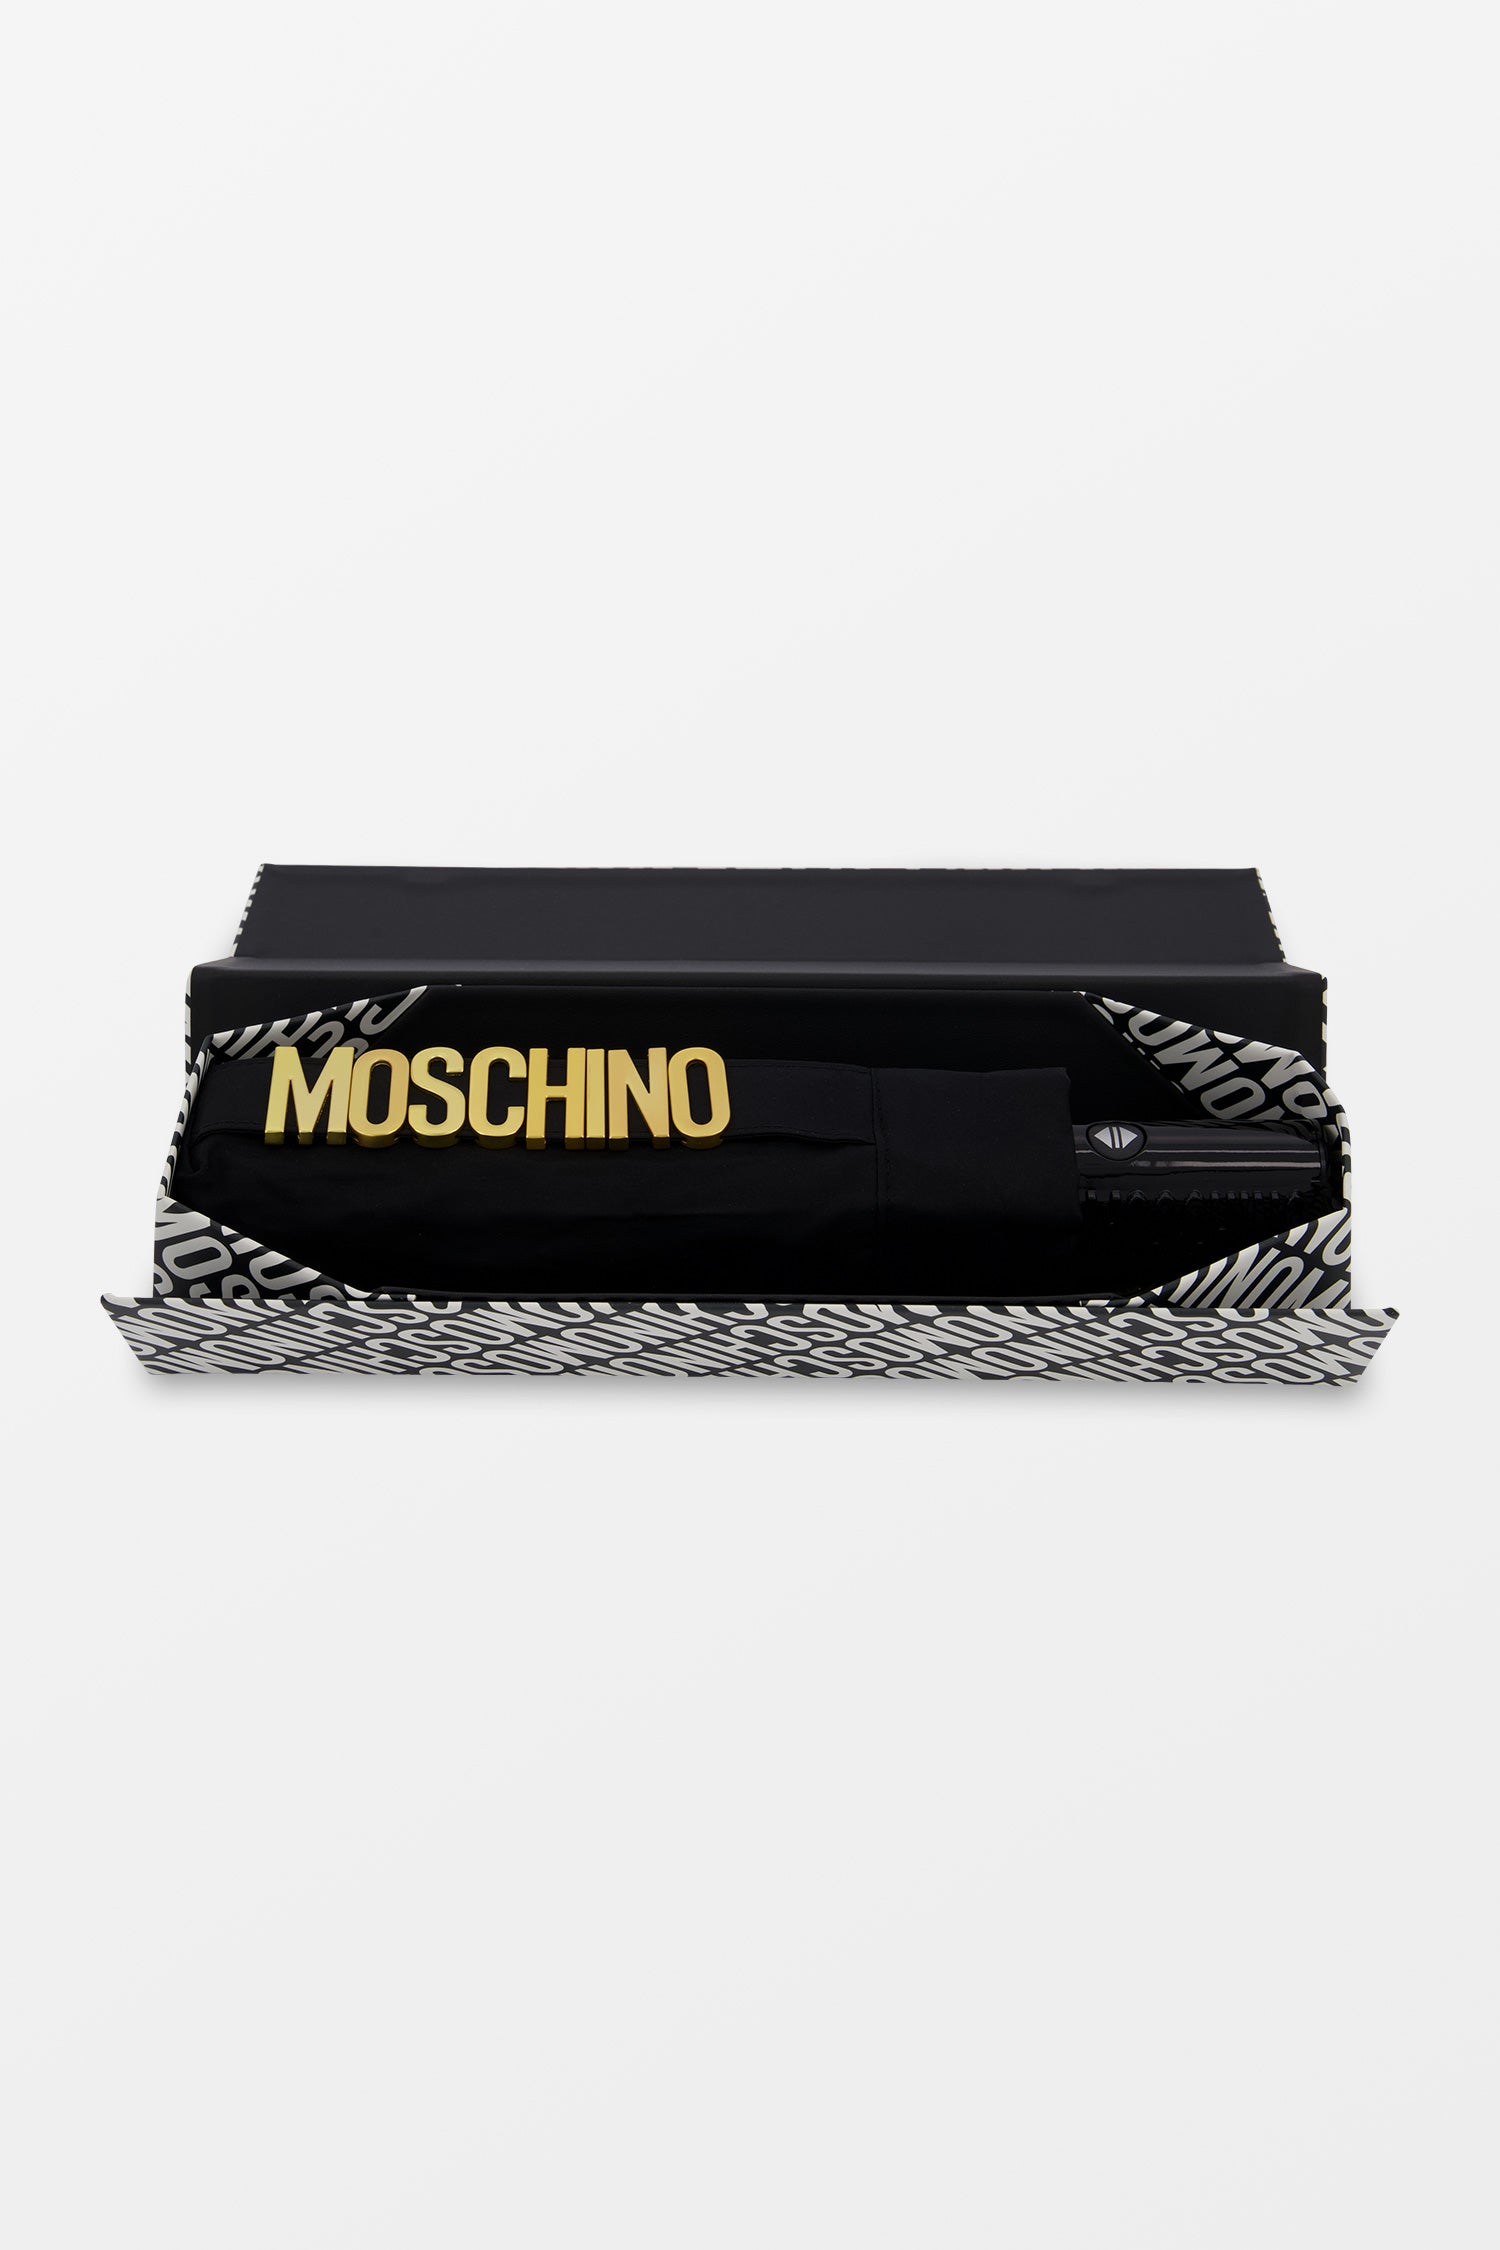 Moschino Metal Logo Black